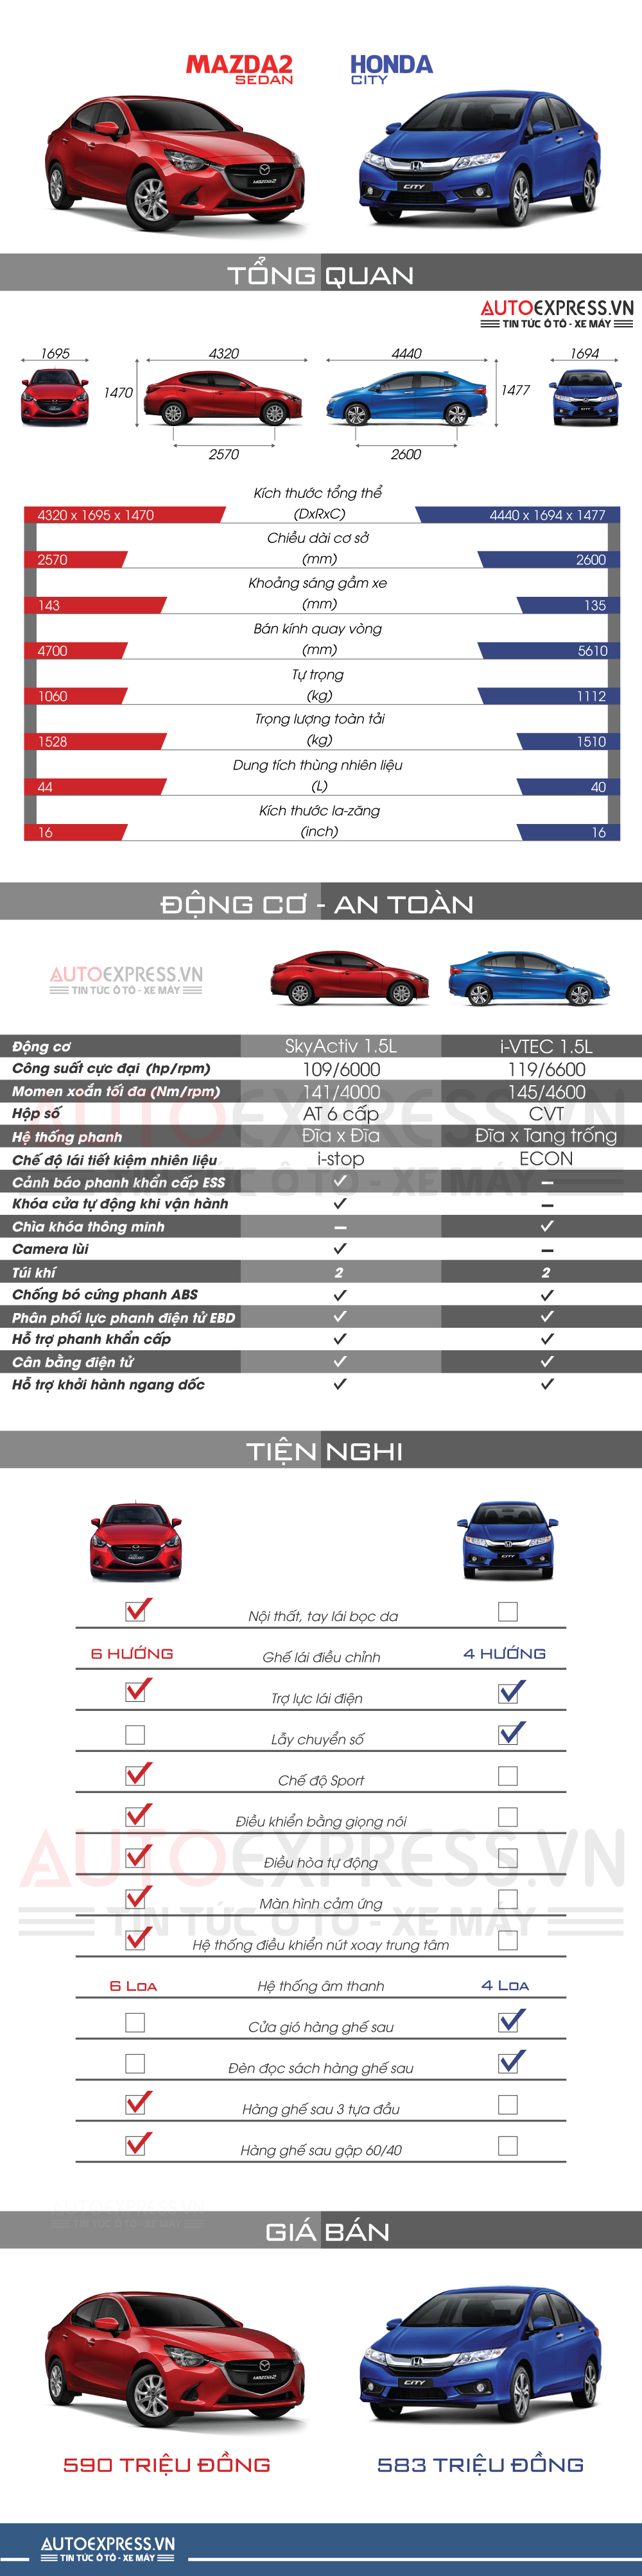 Chọn mua Mazda 2 sedan hay Honda City CVT